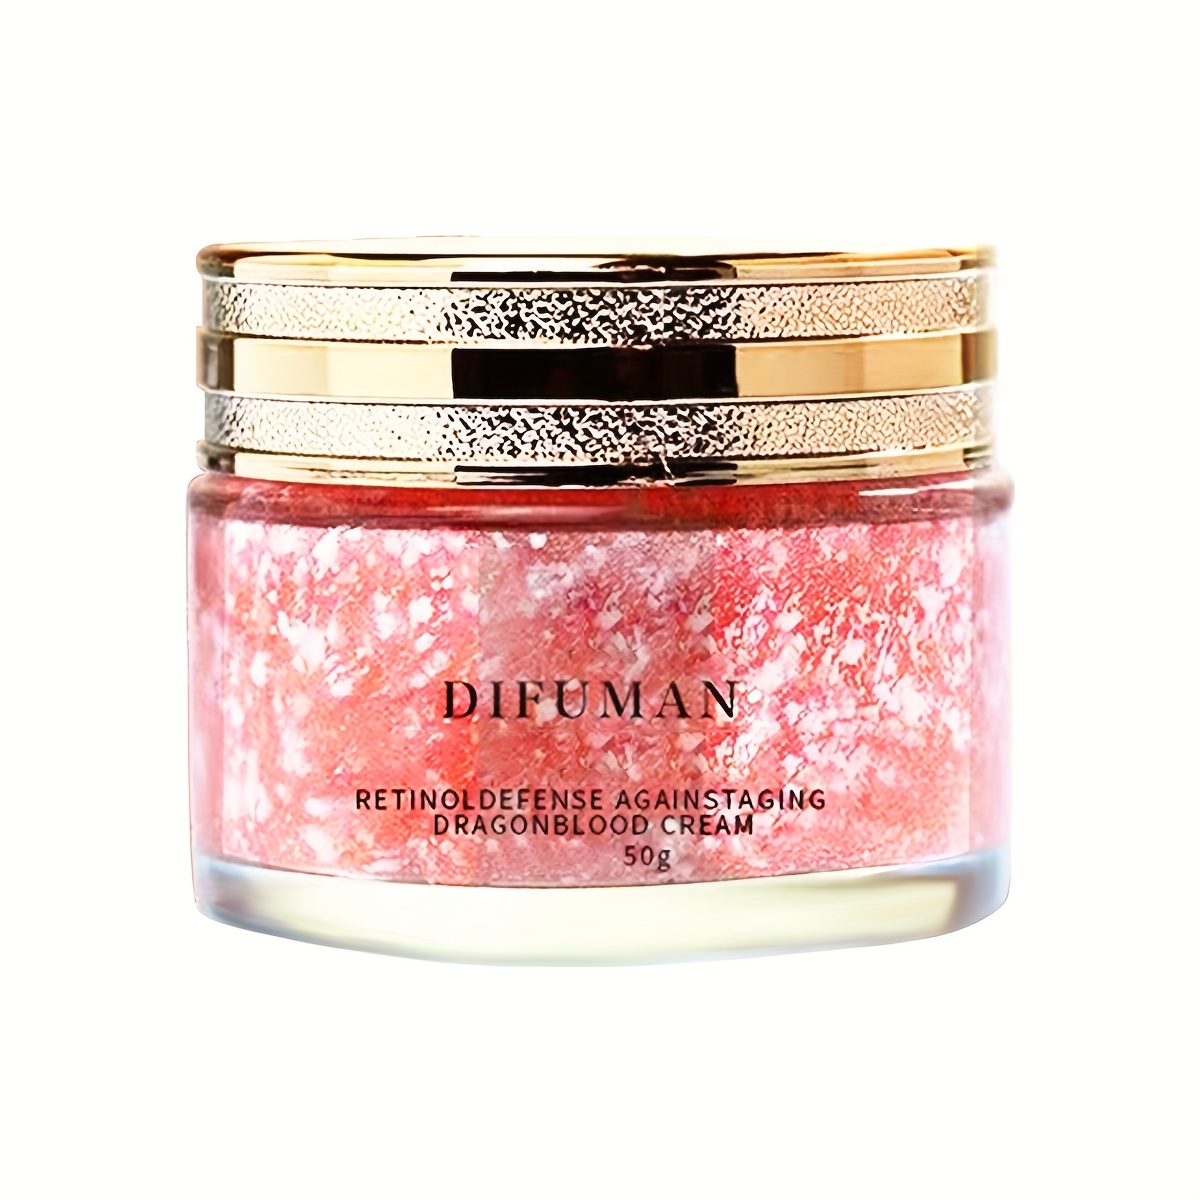 

30g Dragon Blood Cream, Luxury Moisturizing Firming Face Care, Retinol Defense, Ideal Gift For Him & Her, Pink Glass Jar